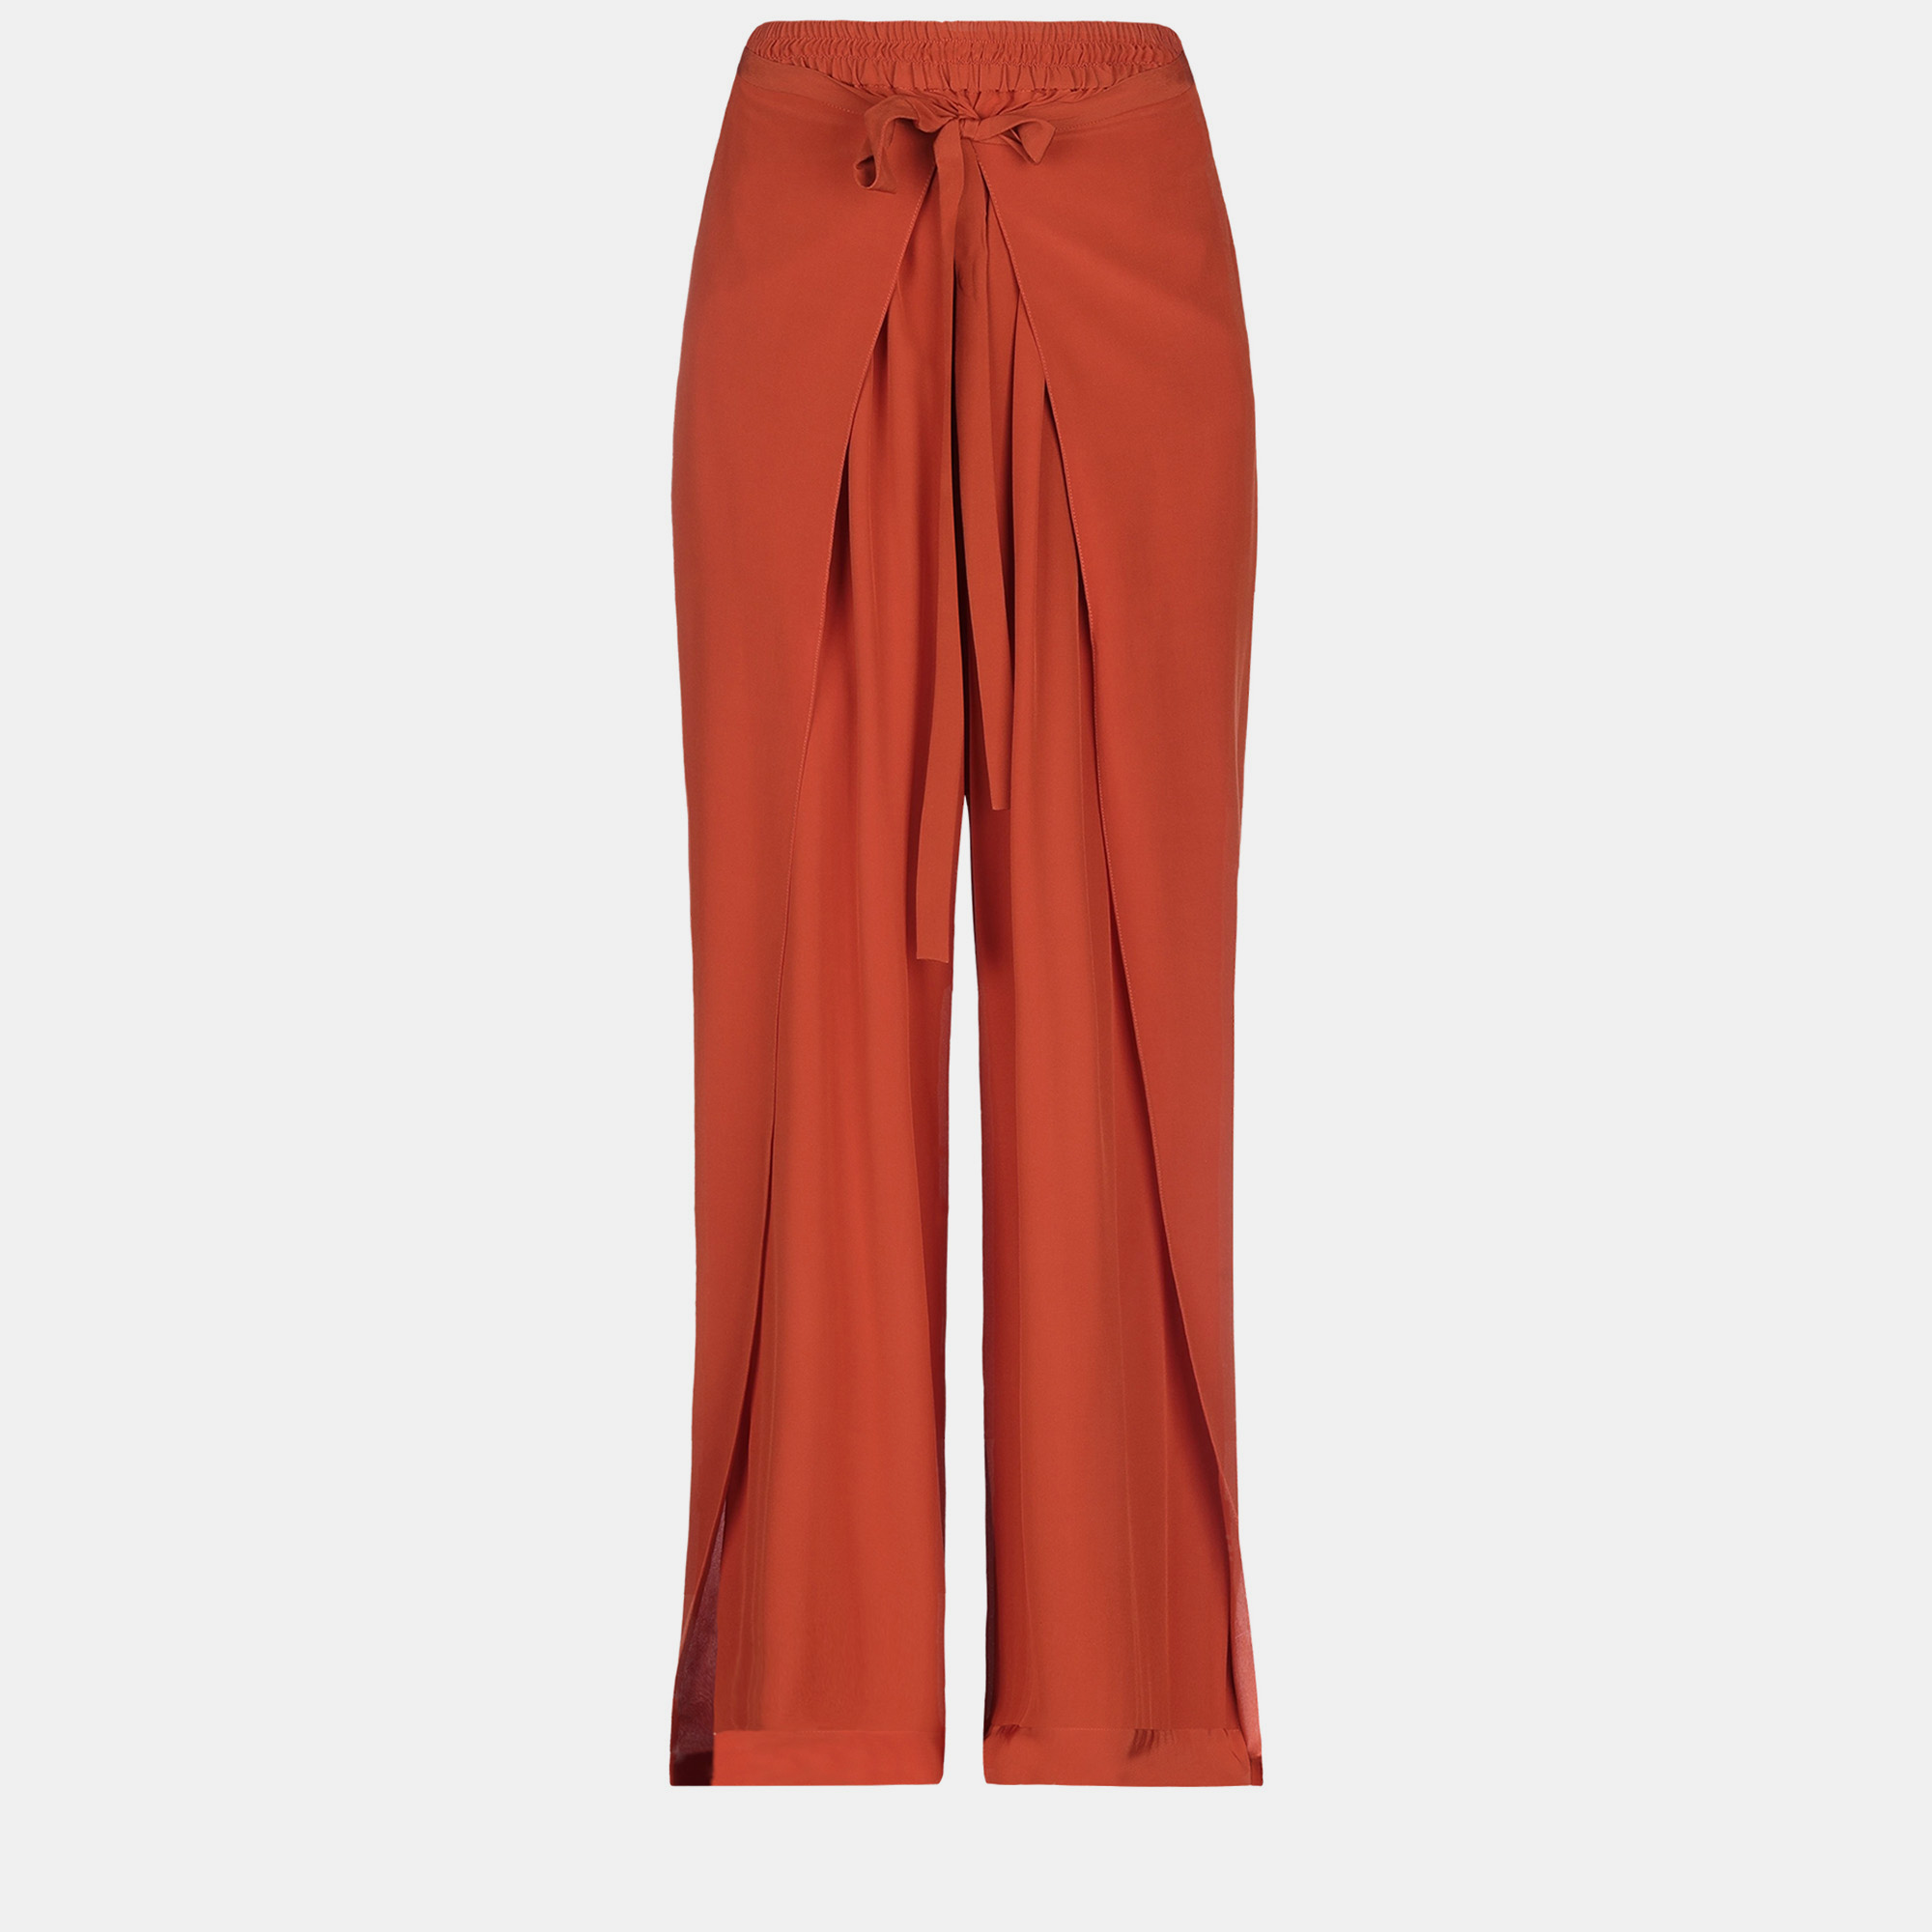 Chloe orange silk wrap pants s (fr 34)